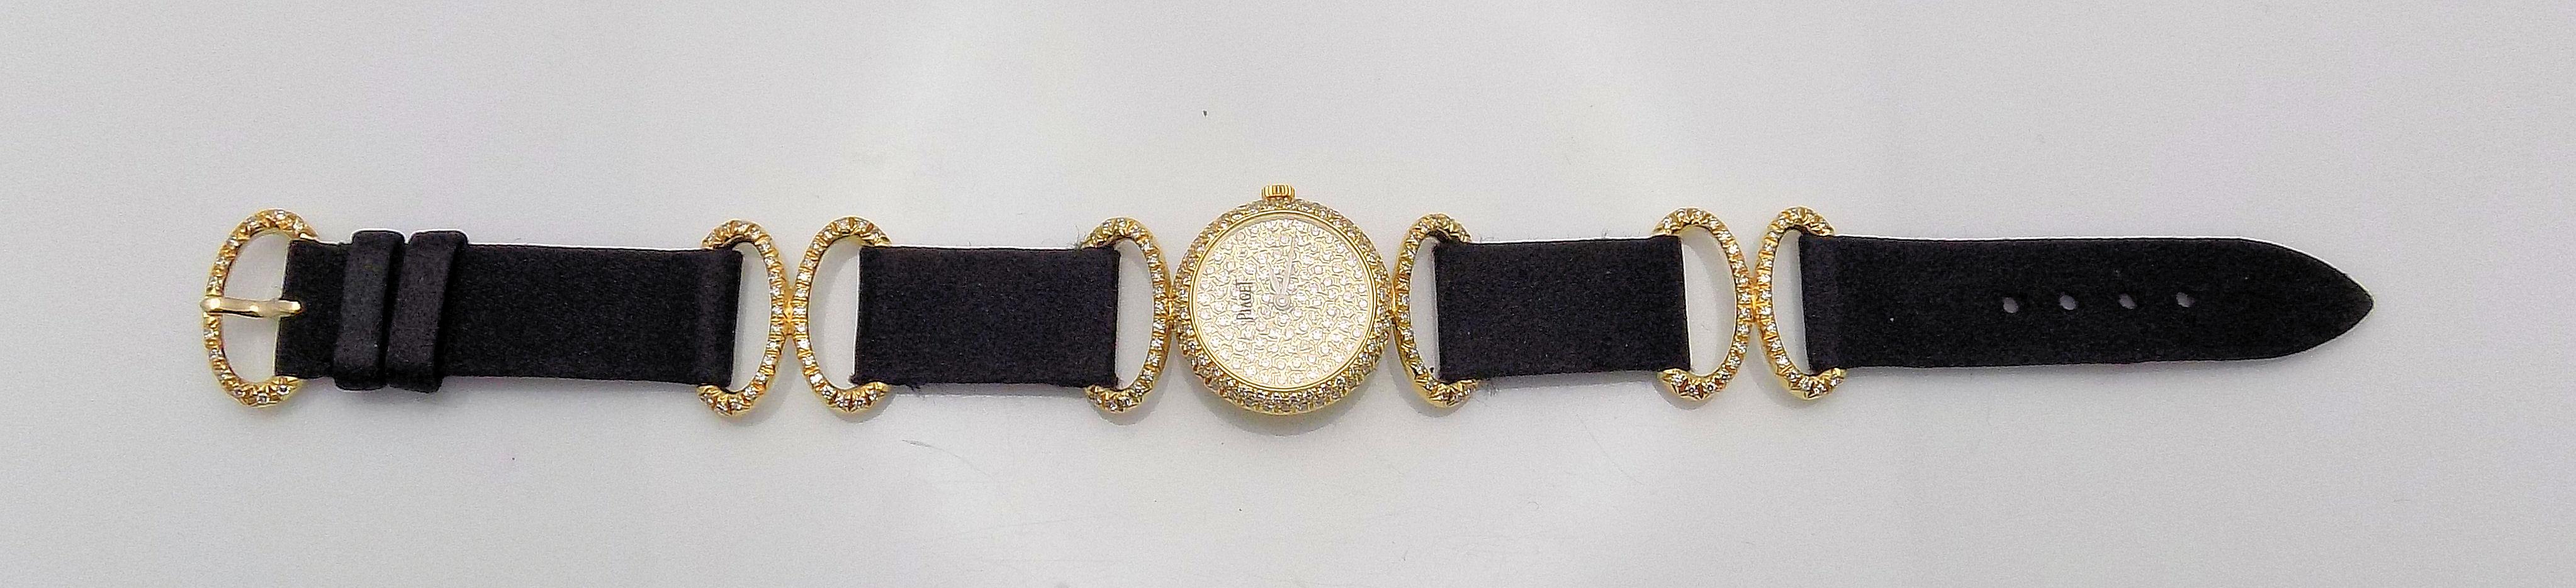 Women's 18 Karat Yellow Gold and Diamond Piaget Wristwatch For Sale